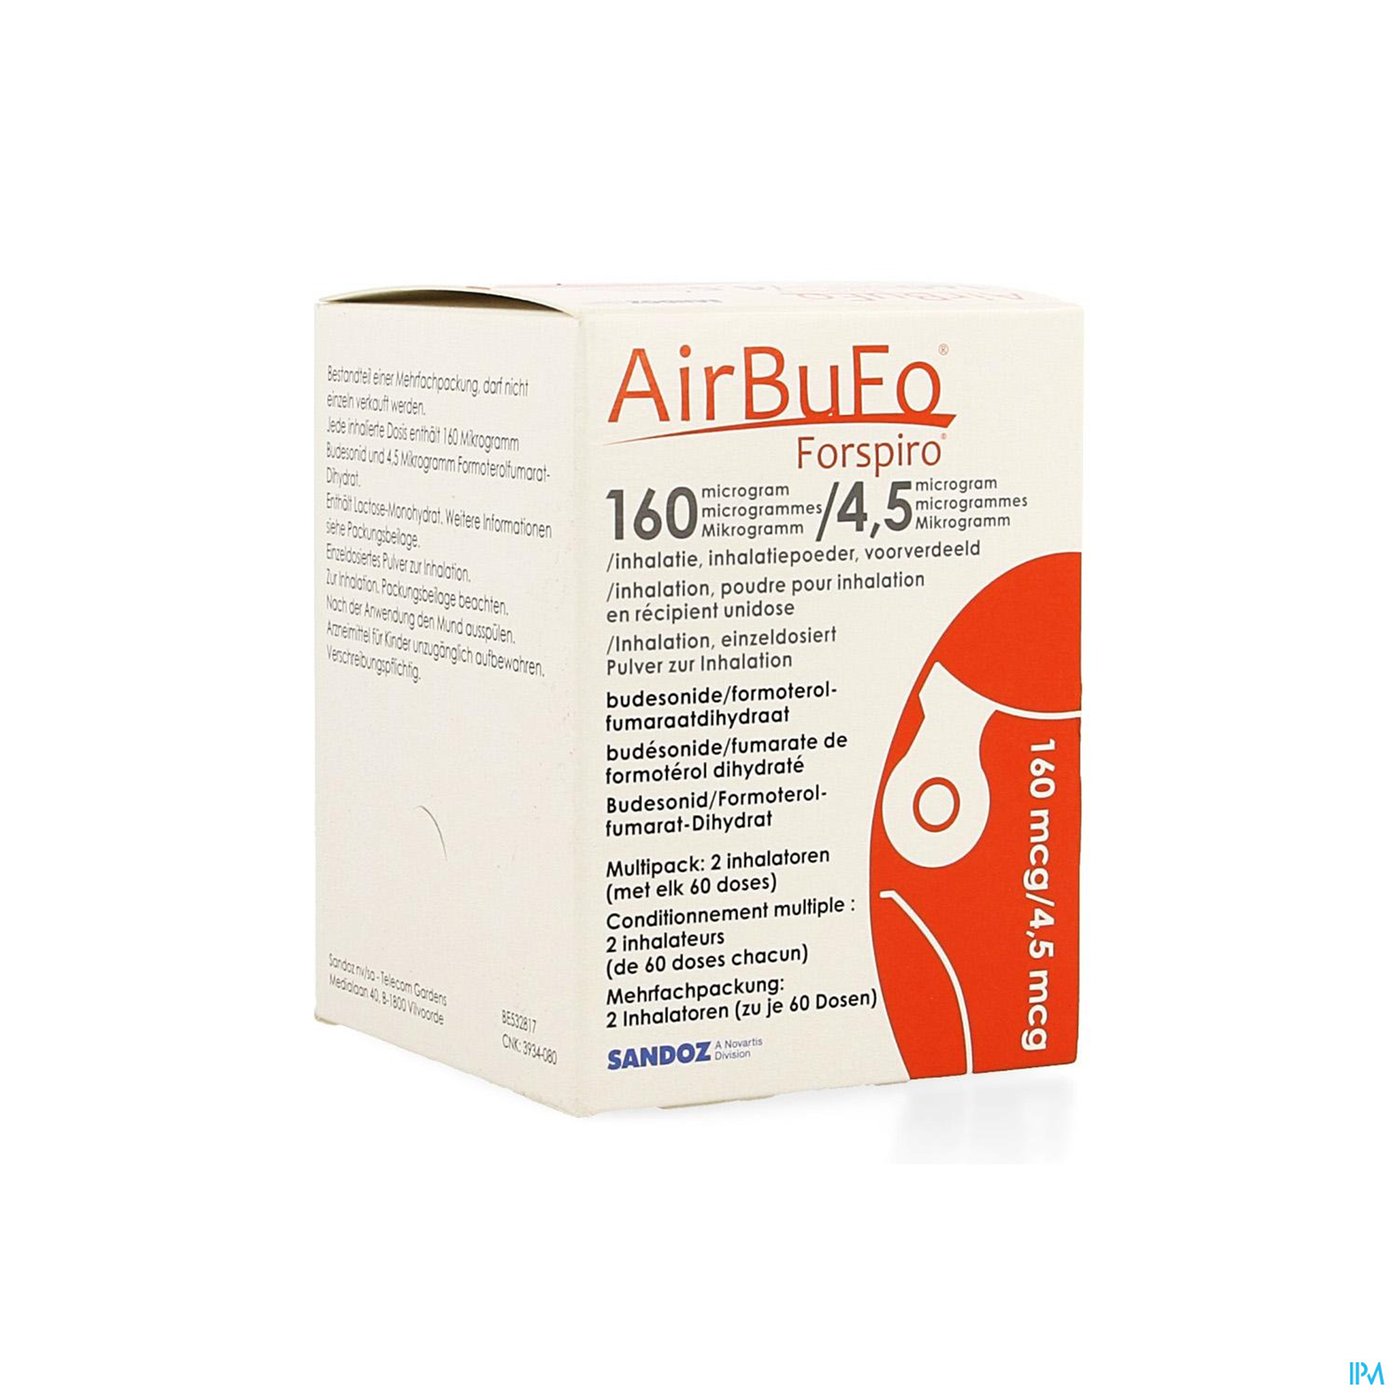 Airbufo Forspiro 160mcg/4,5mcg Inhal. 2 X 60dosis packshot